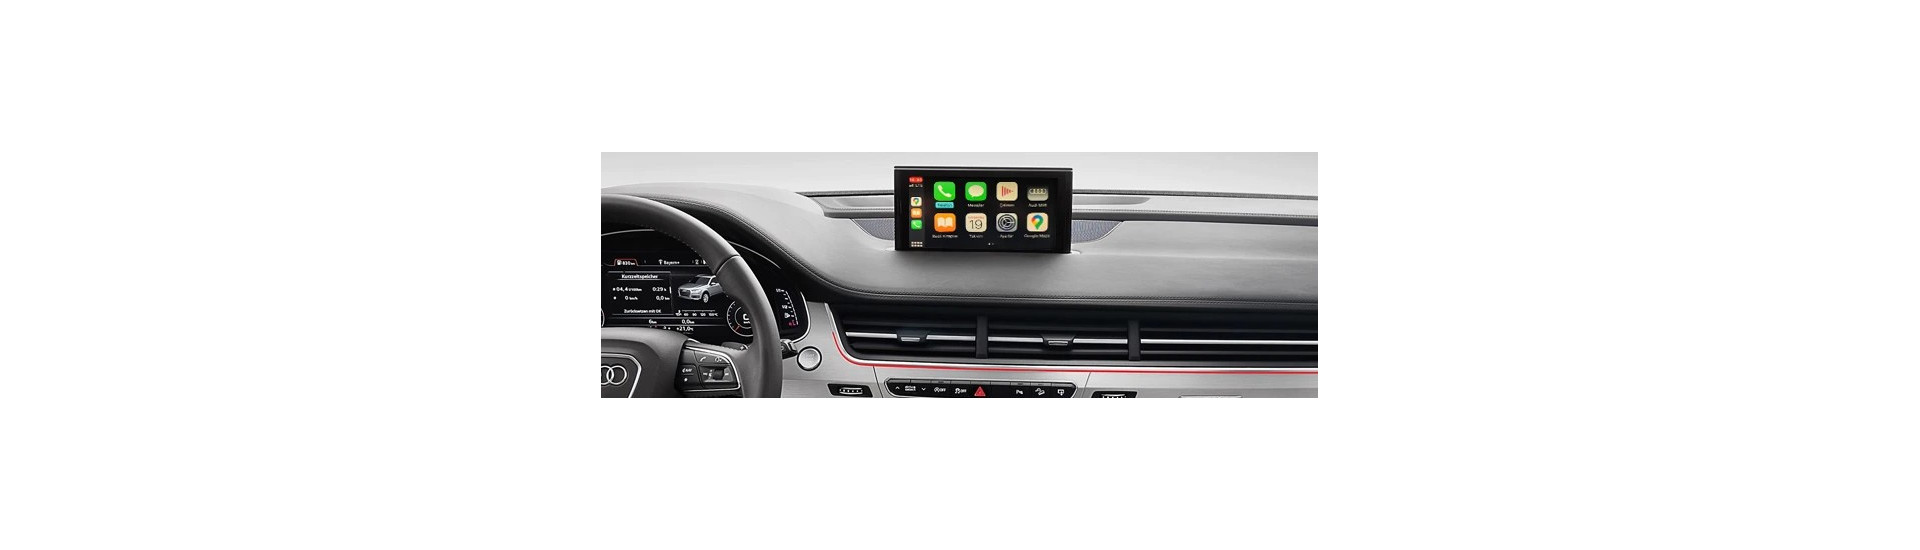 Cauti interfata Carplay Android auto pentru Audi? Vezi oferta noastra!